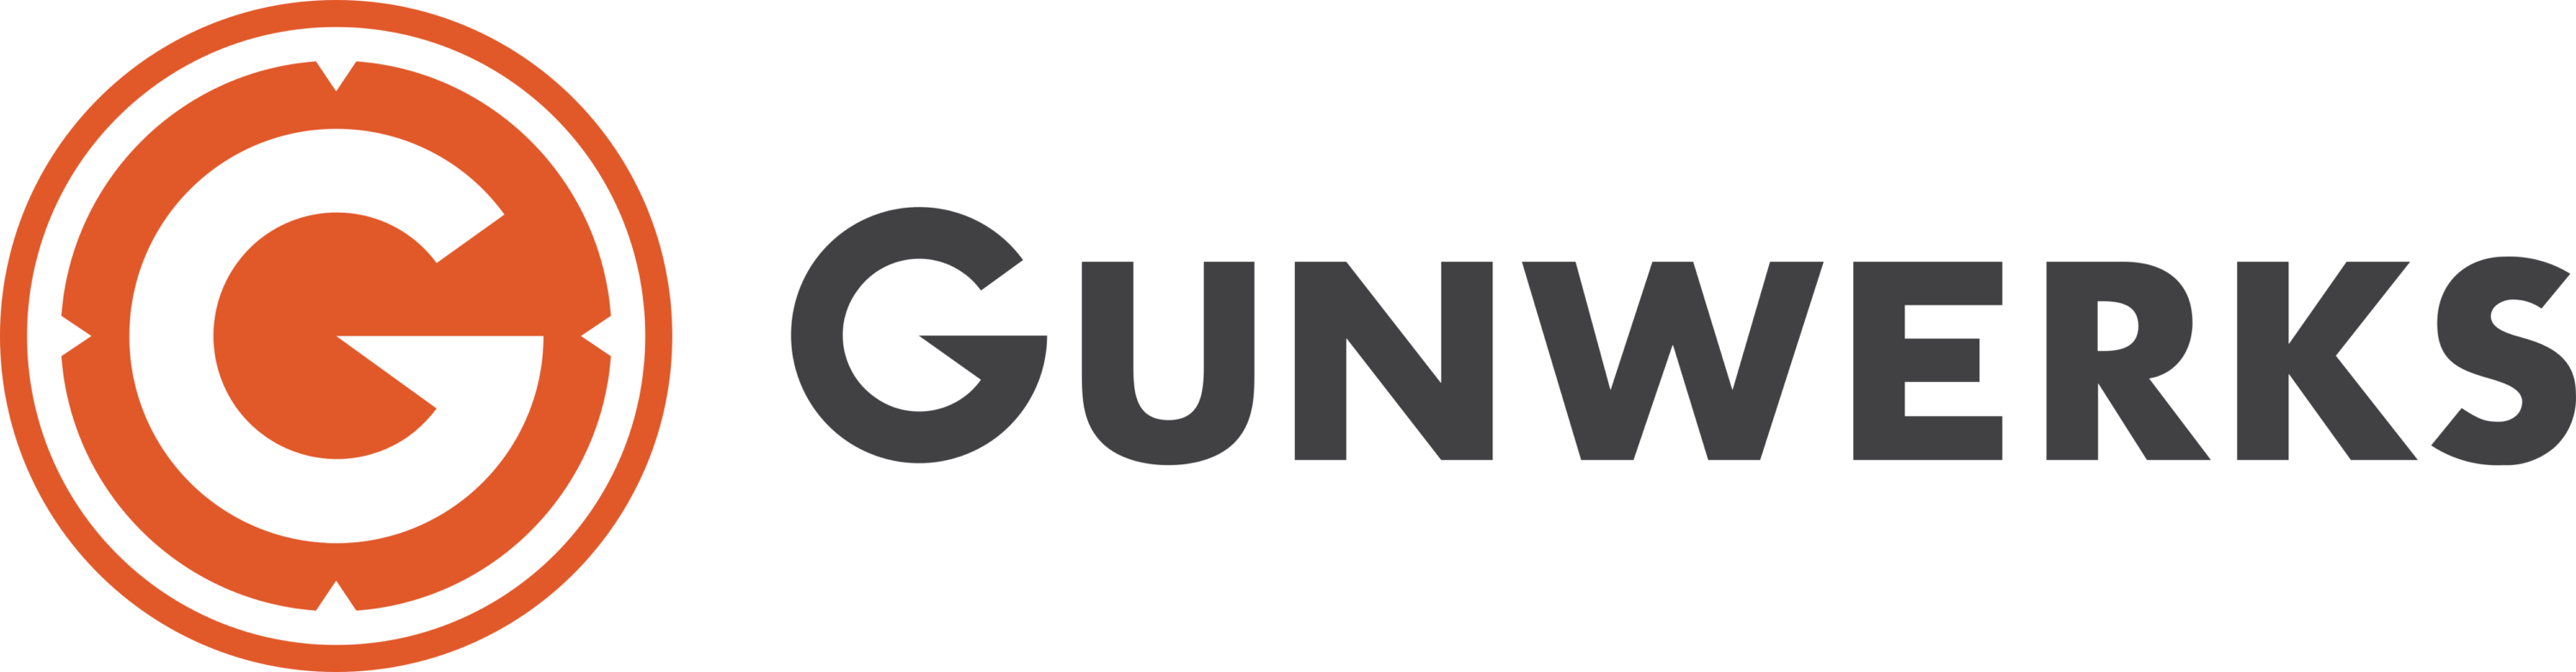 Gunwerks Logo